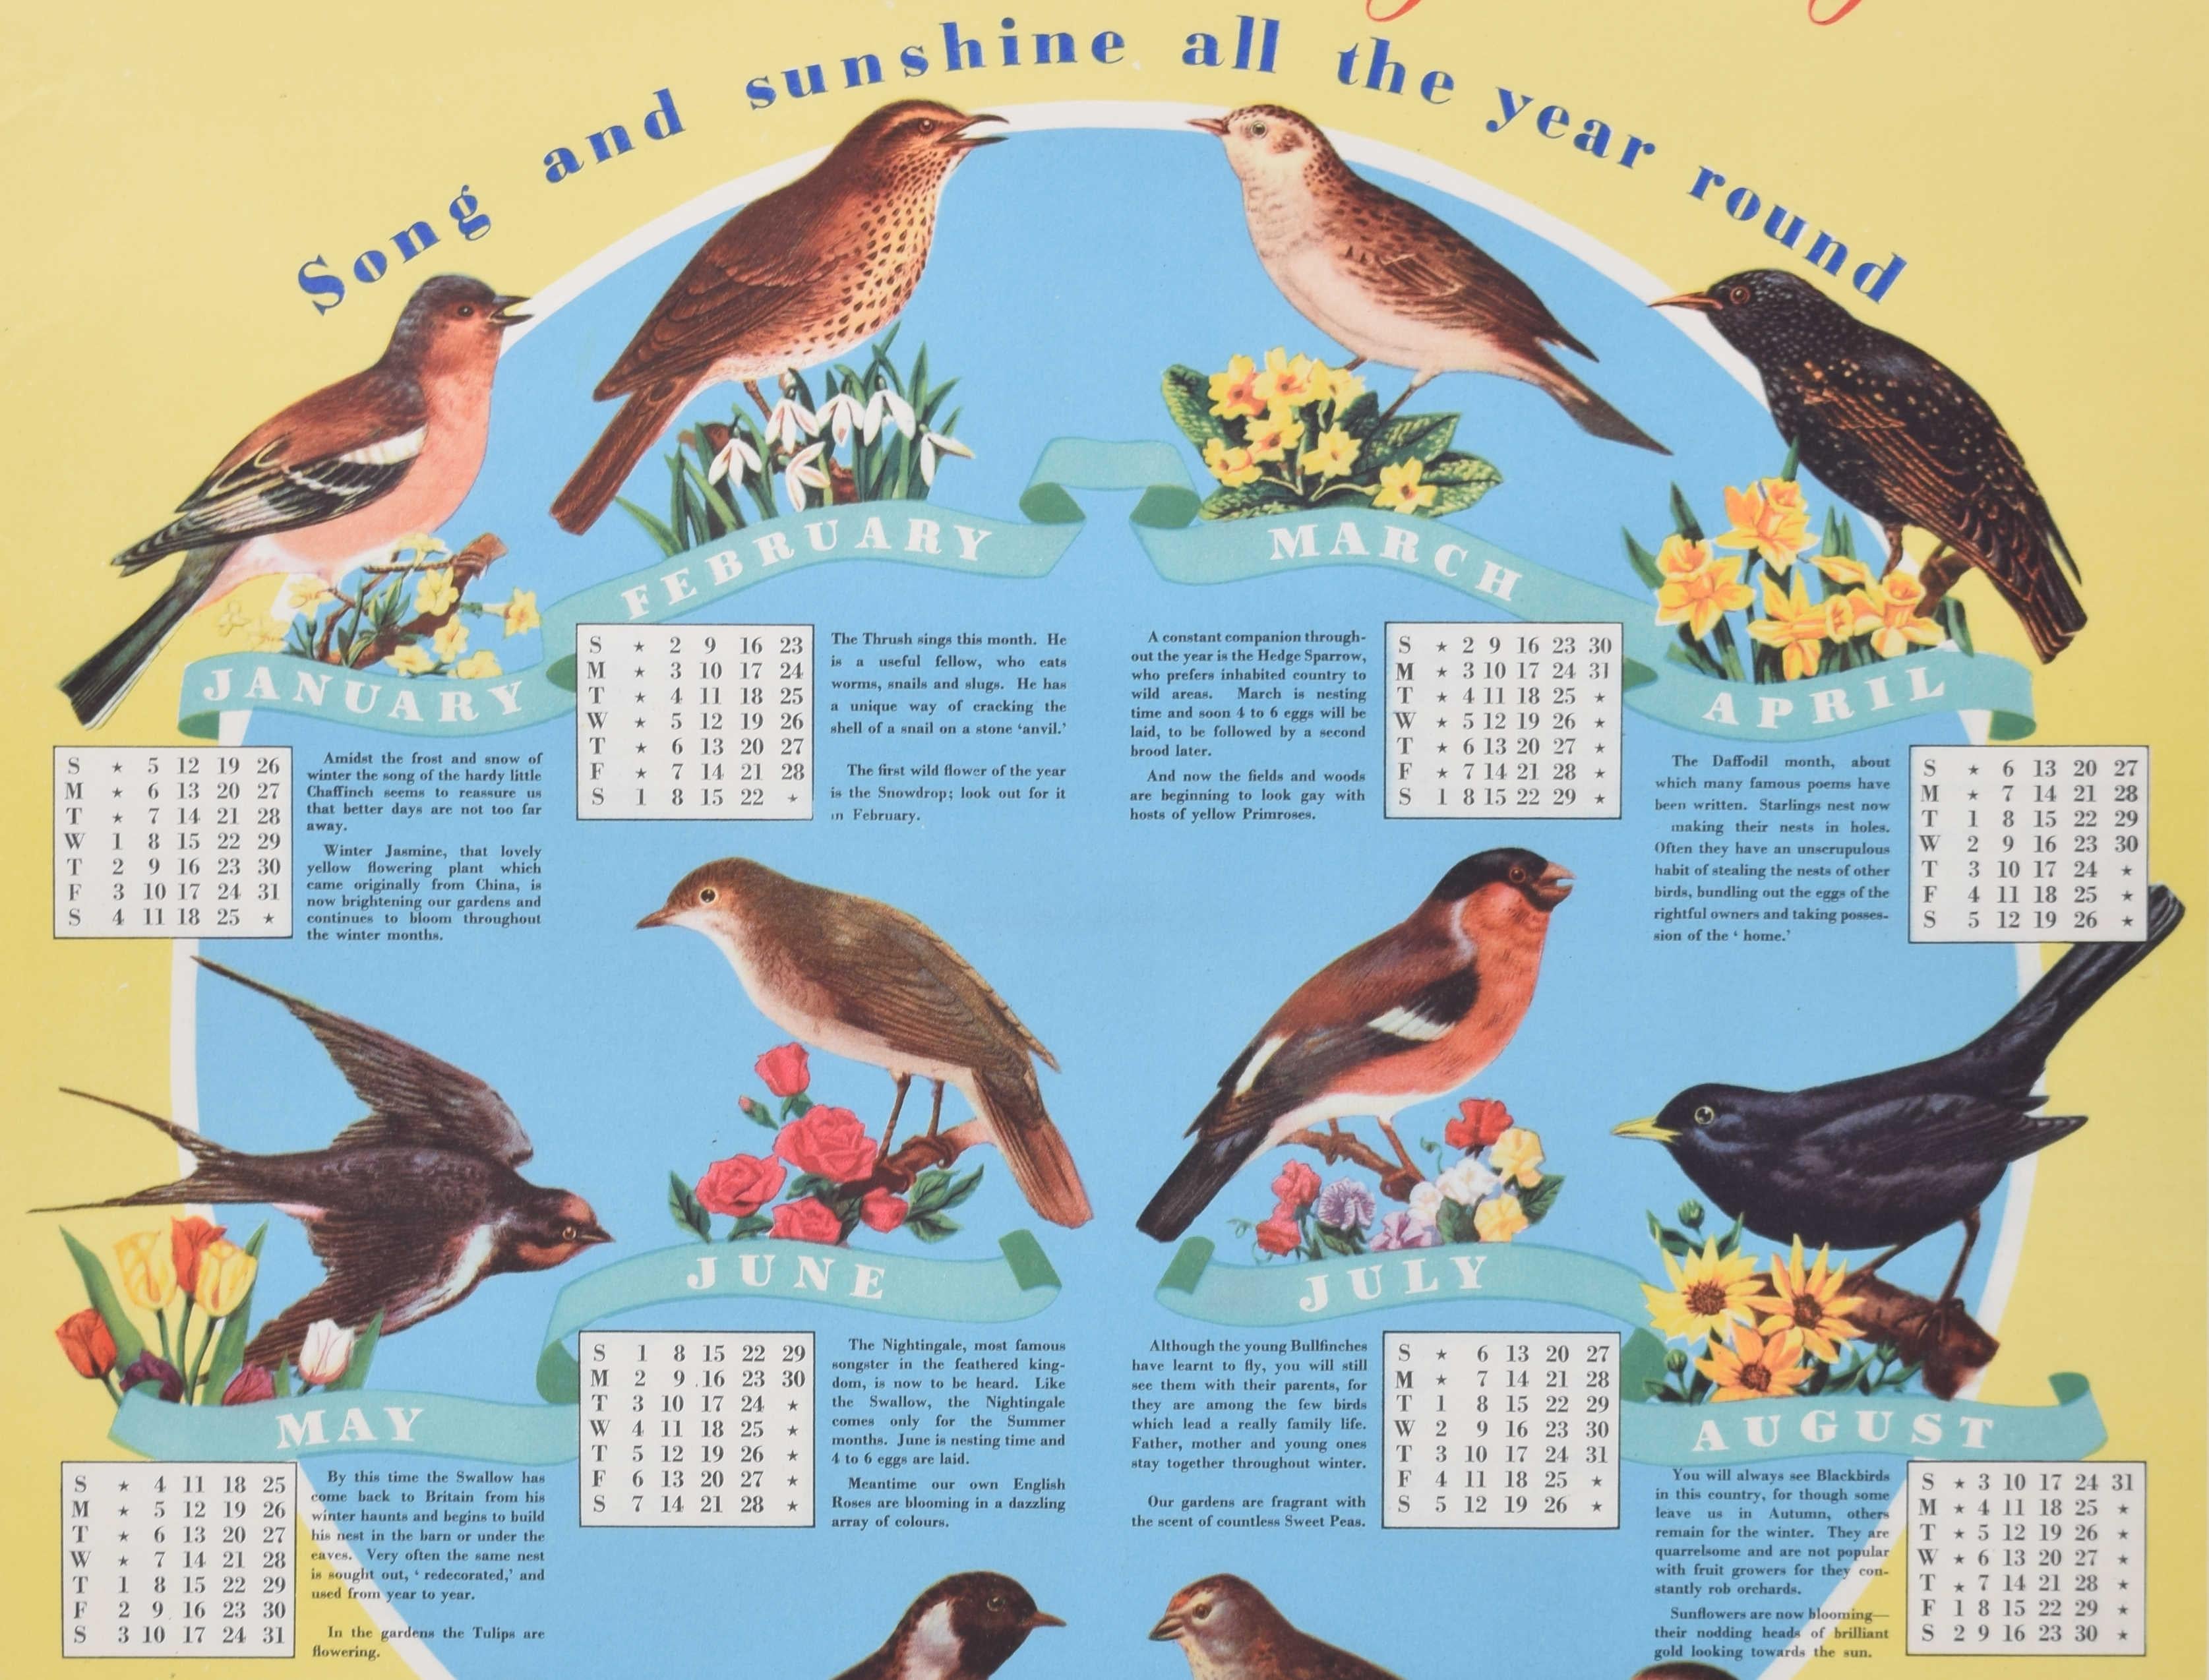 1947 calendar year